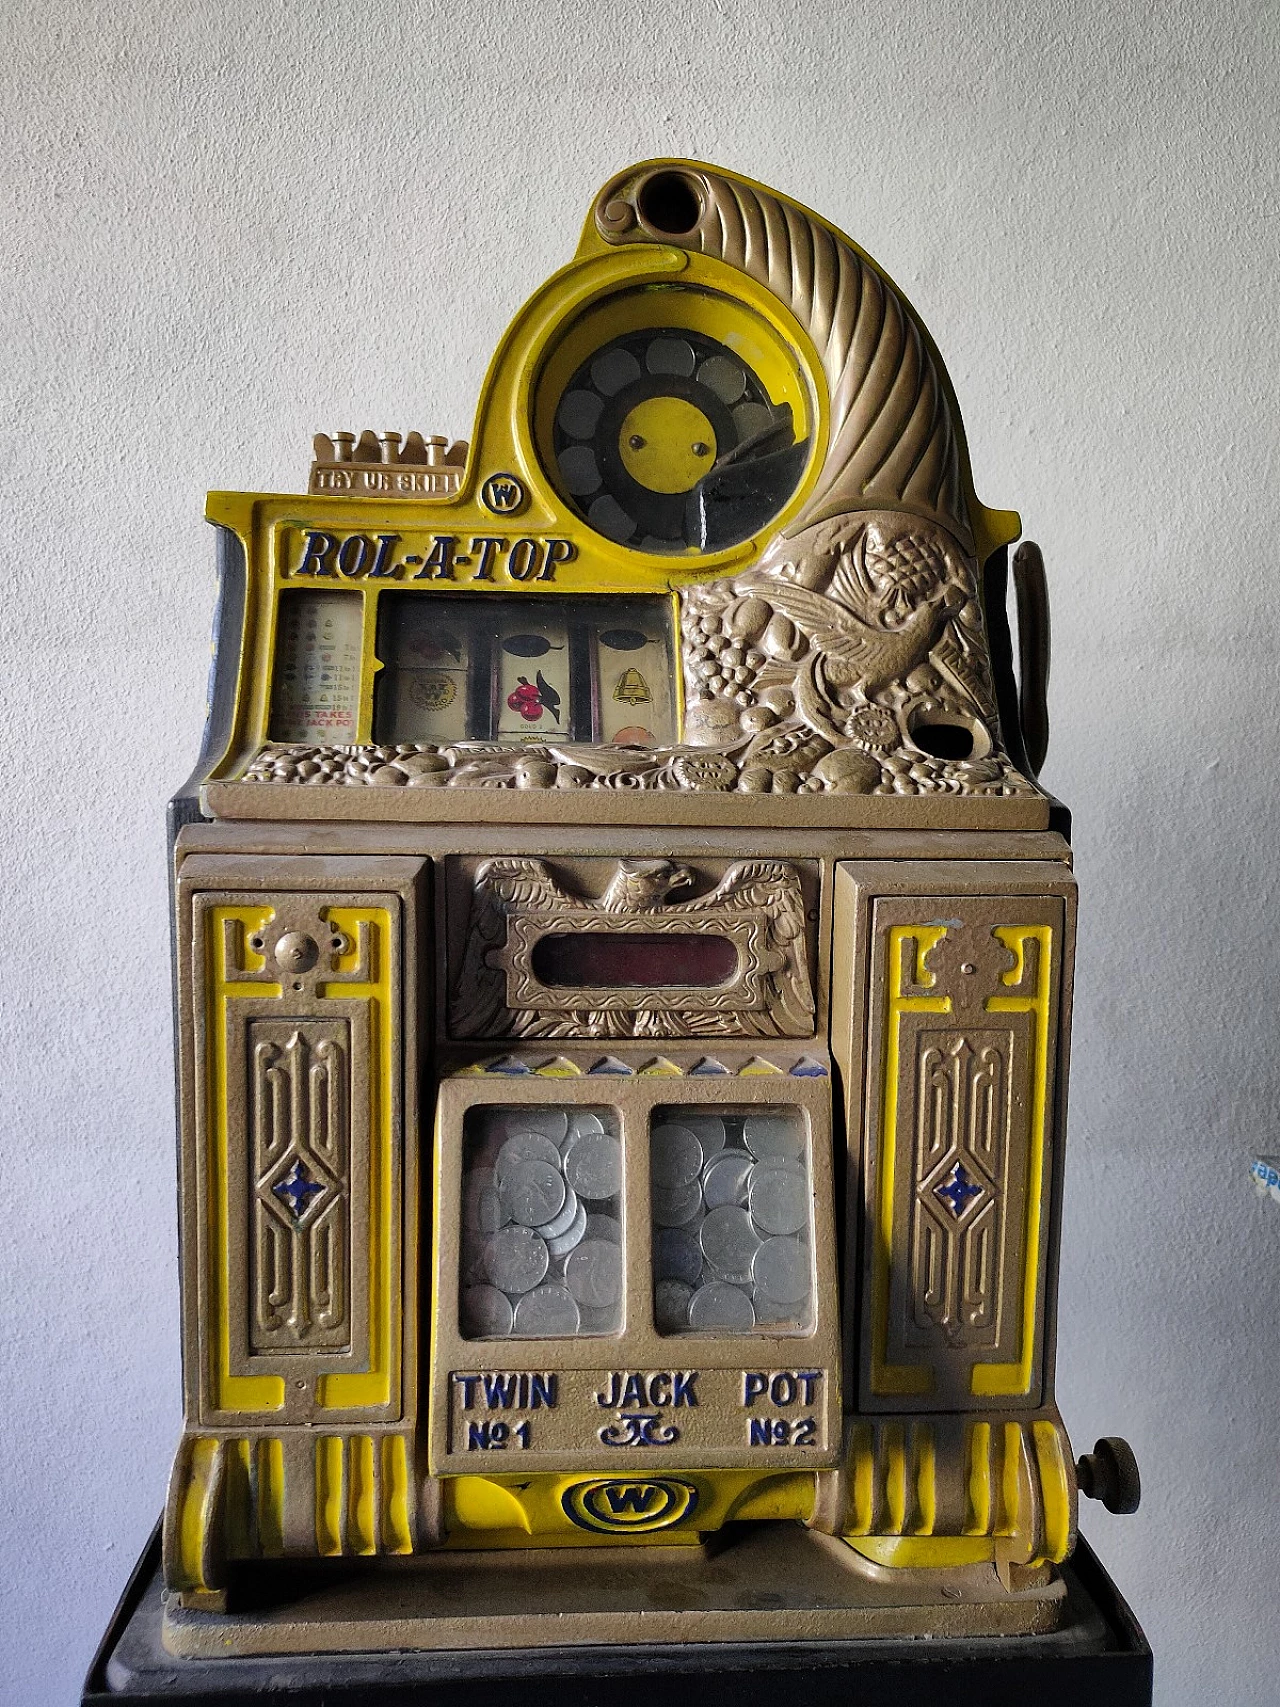 Watling Rol A Top 25 cent slot machines, 1930s 1